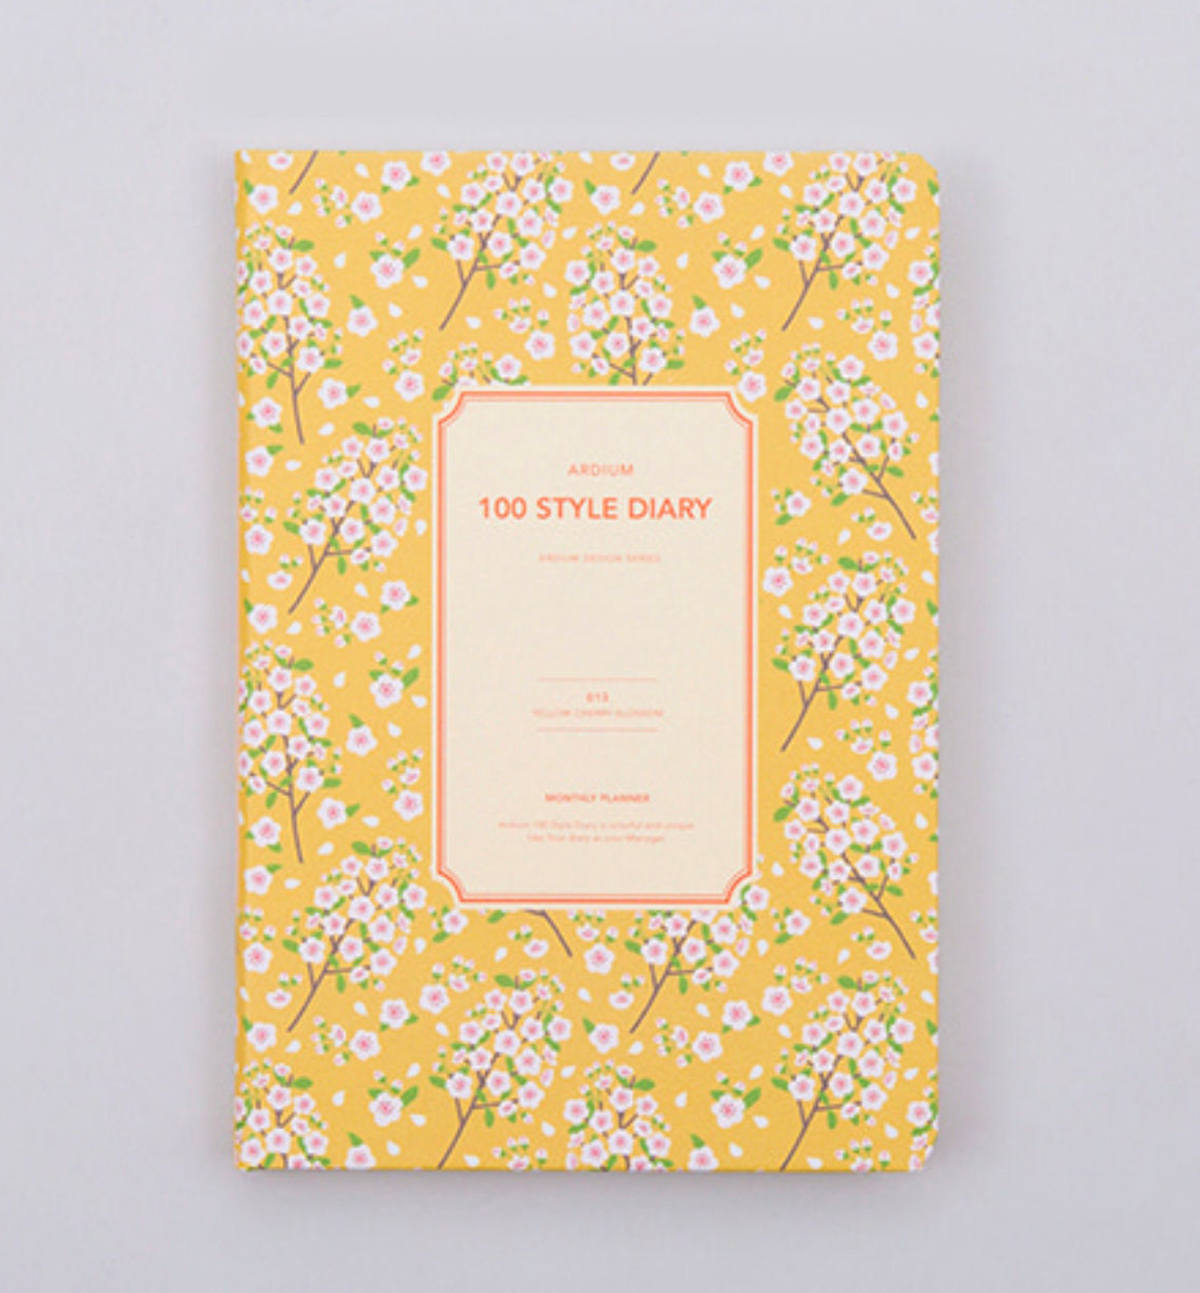 100 Style Diary [Yellow Cherry Blossom]